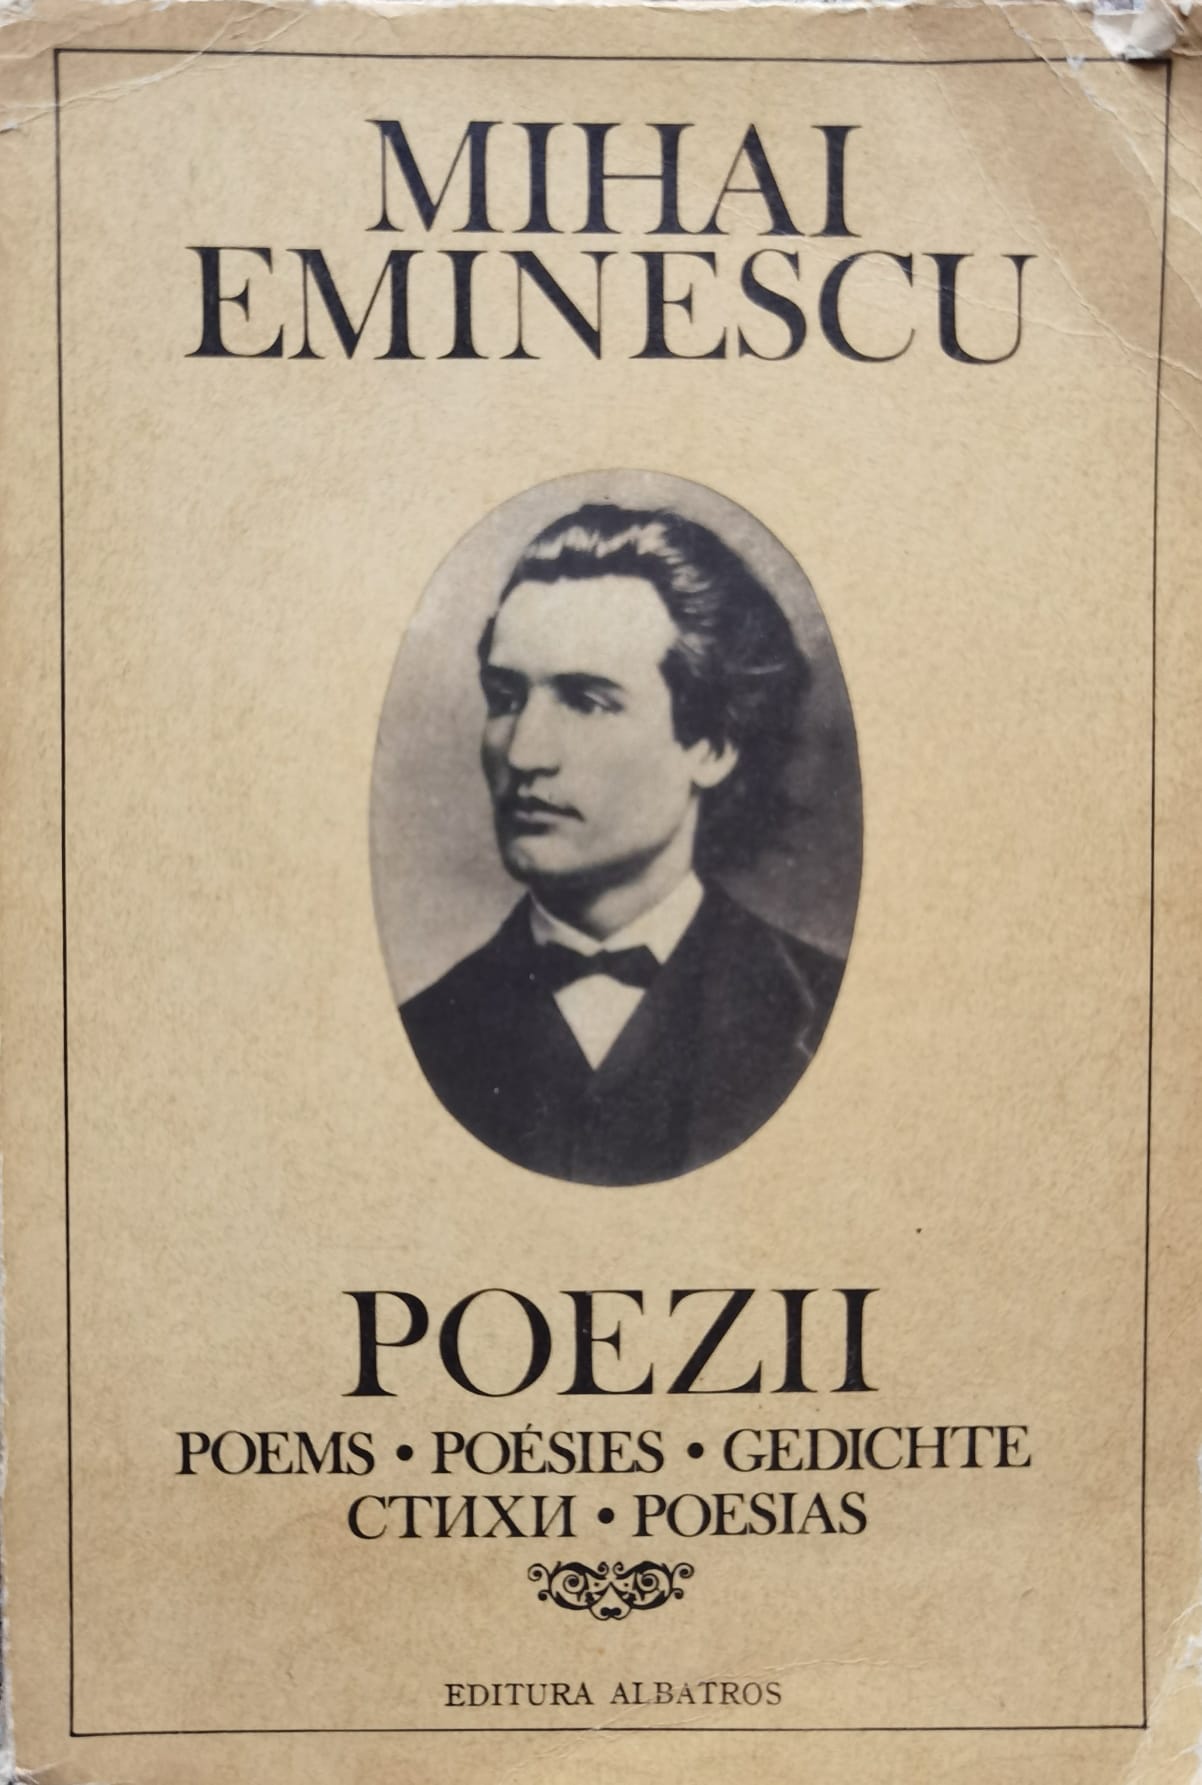 poezii poems poesies gedichte stihi poesias                                                          mihai eminescu                                                                                      